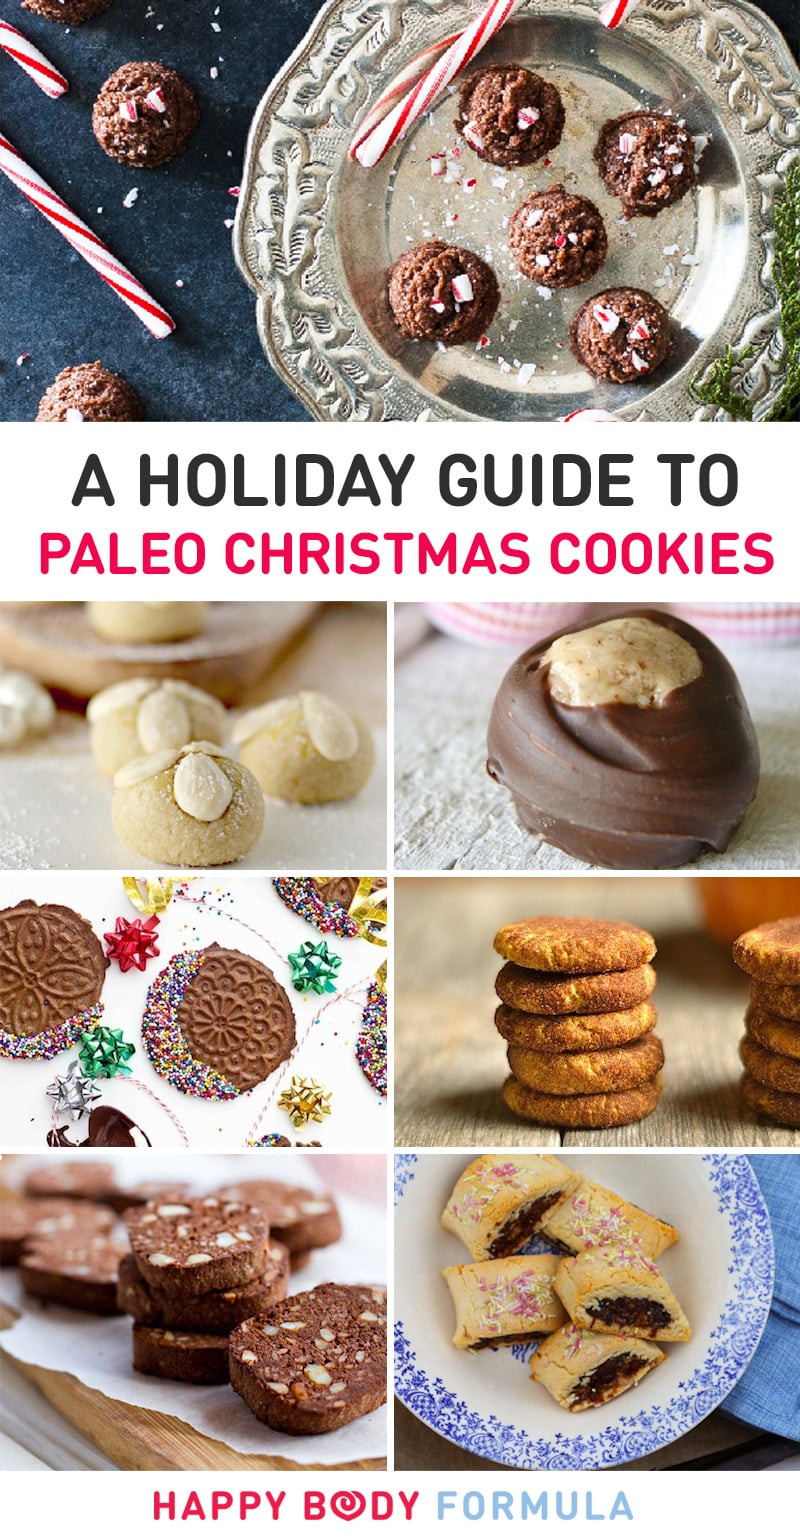 Paleo Christmas Desserts
 The Best Paleo Christmas Cookie Recipes